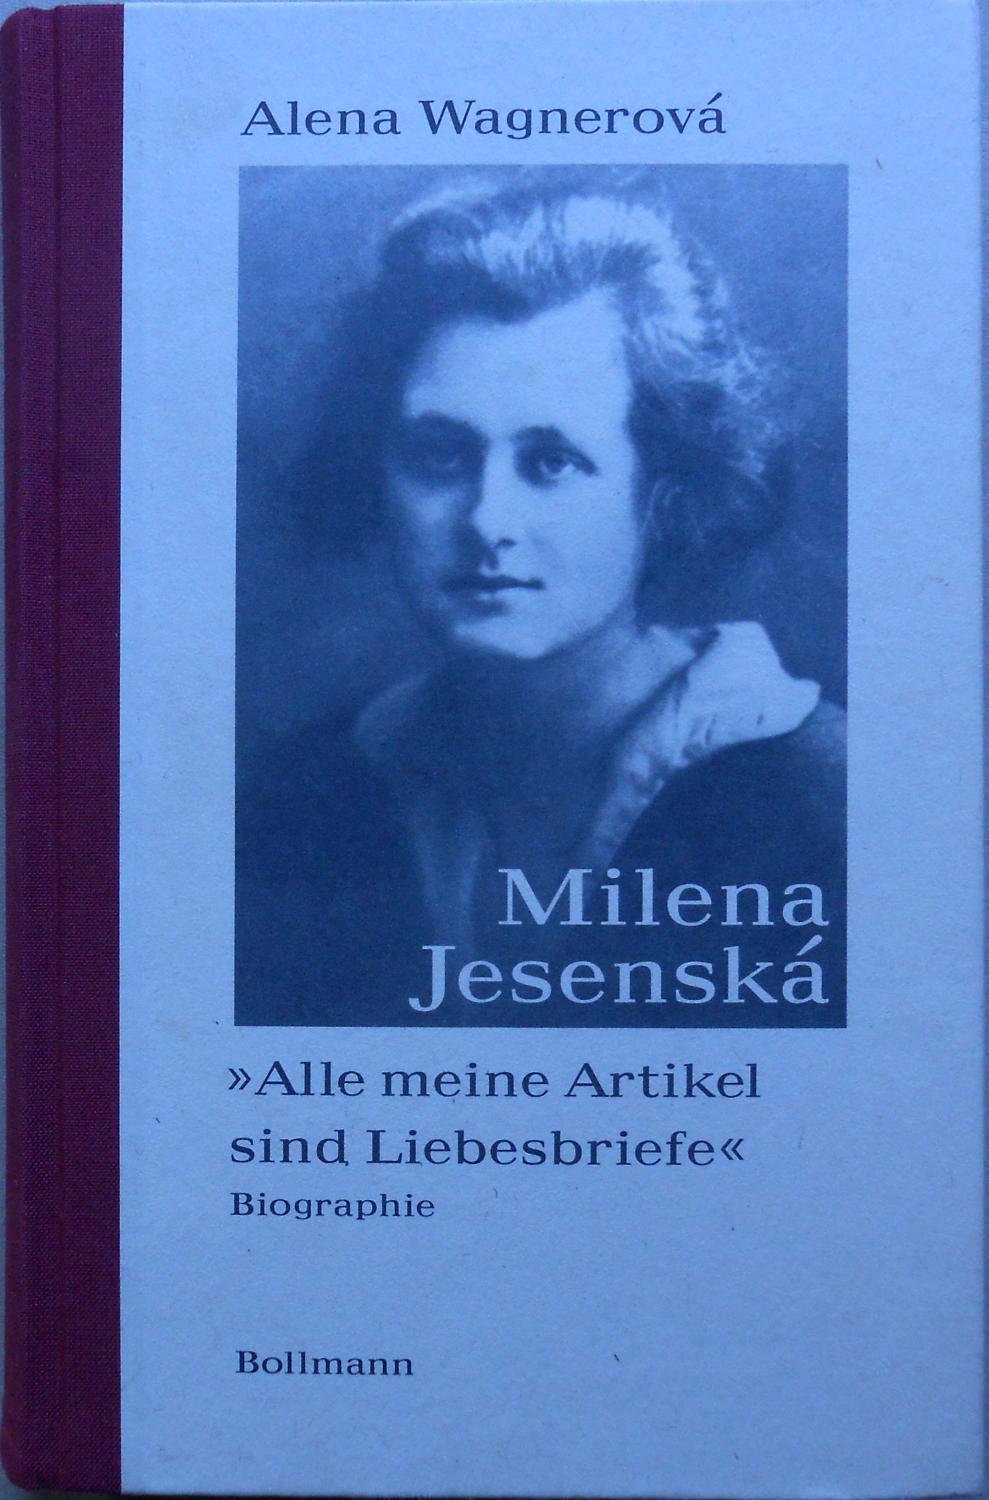 Milena Jesenská. Biographie. - Wagnerová, Alena